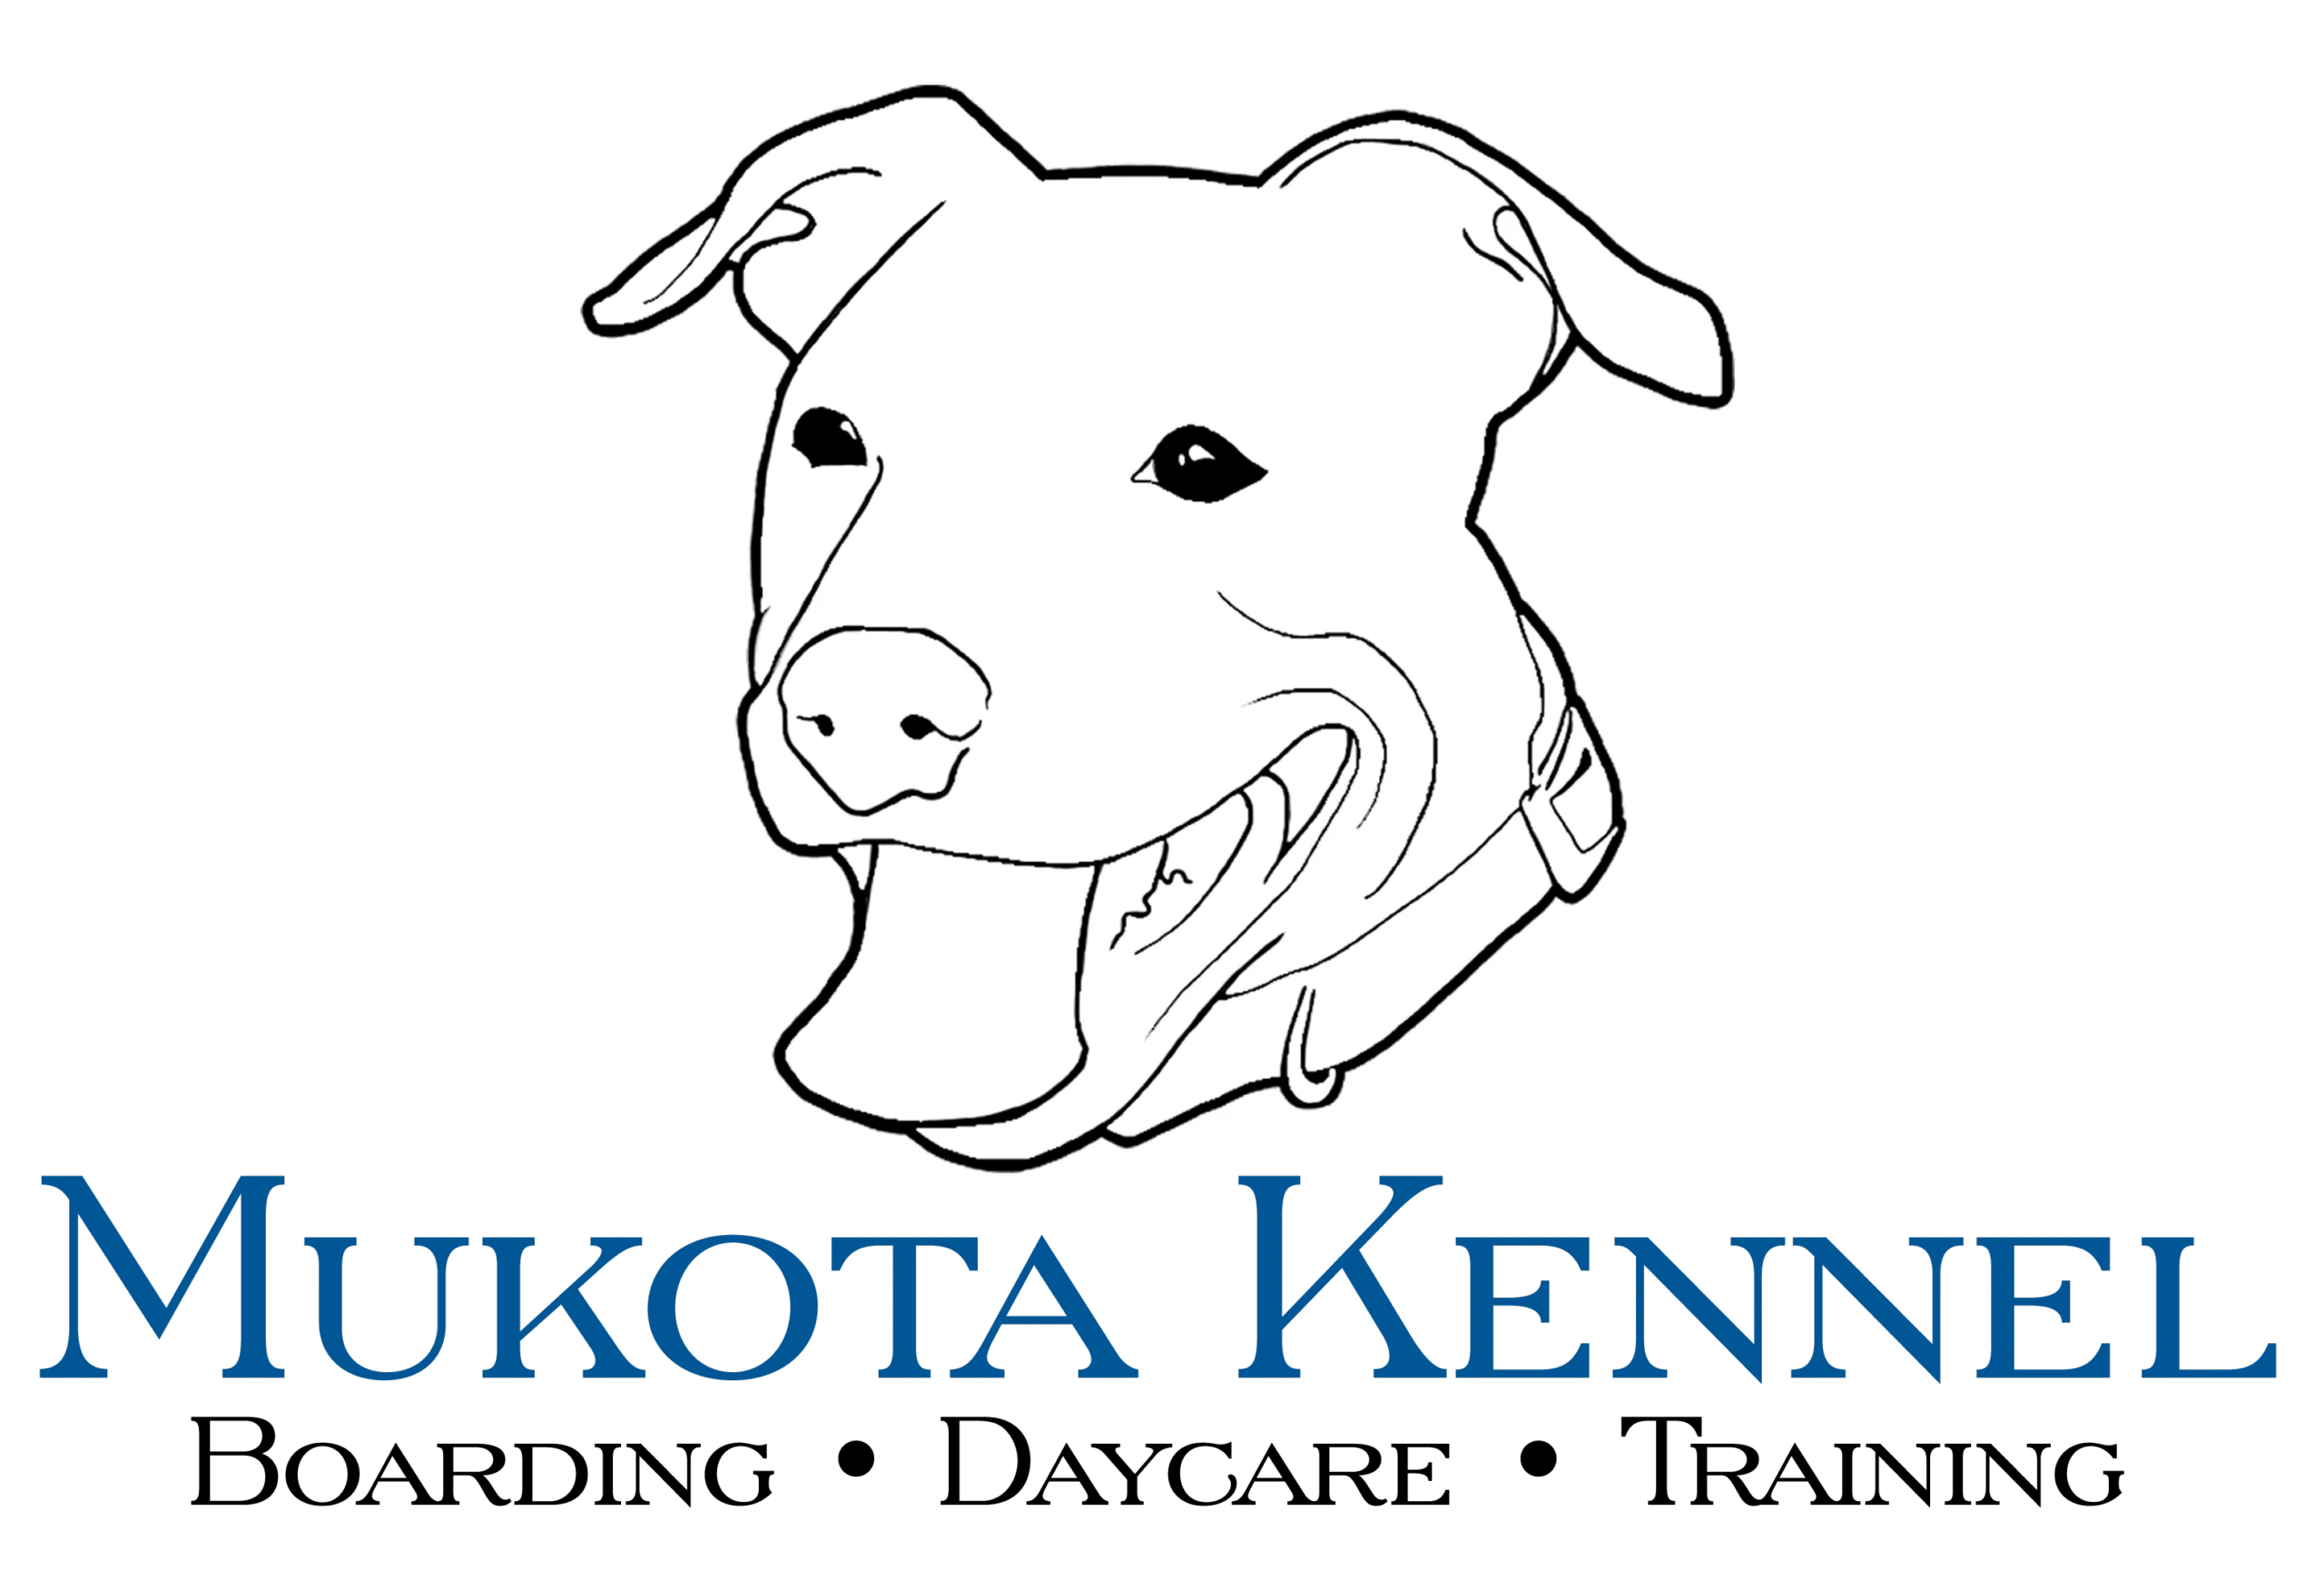 Mukota Kennel: Dog Boarding, Dog Daycare, Cat Boarding, Dog Kennel, Boarding Kennel located in Swanzey New Hampshire